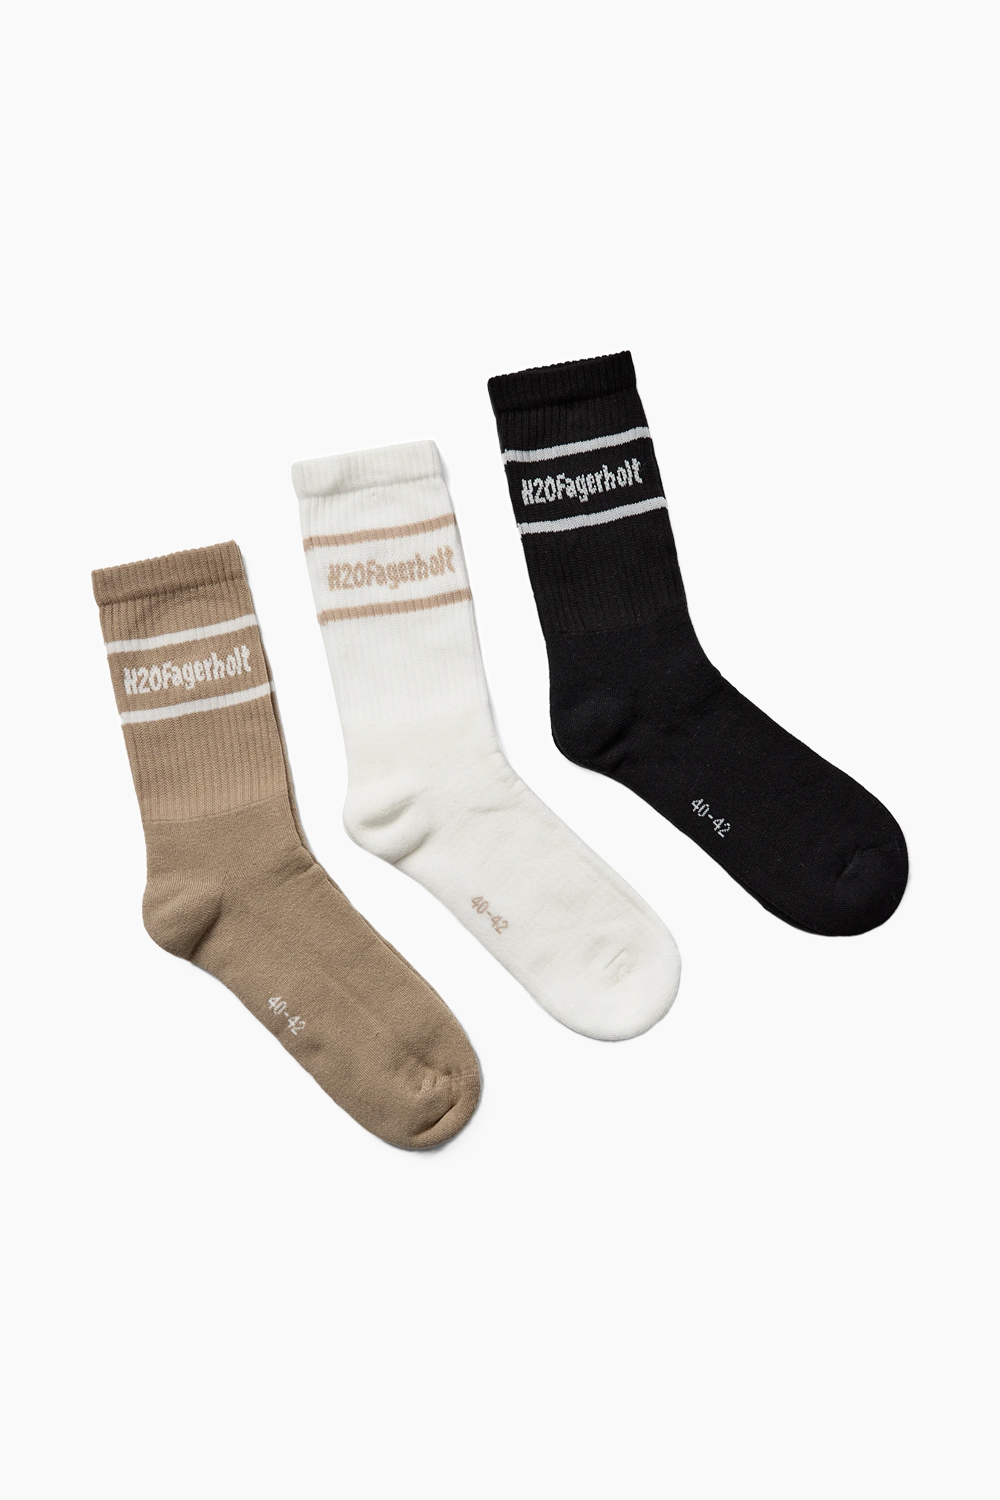 Se New Suck Socks - Black/White/Creamy Grey - H2O Fagerholt - Mønstret 36-39 hos QNTS.dk